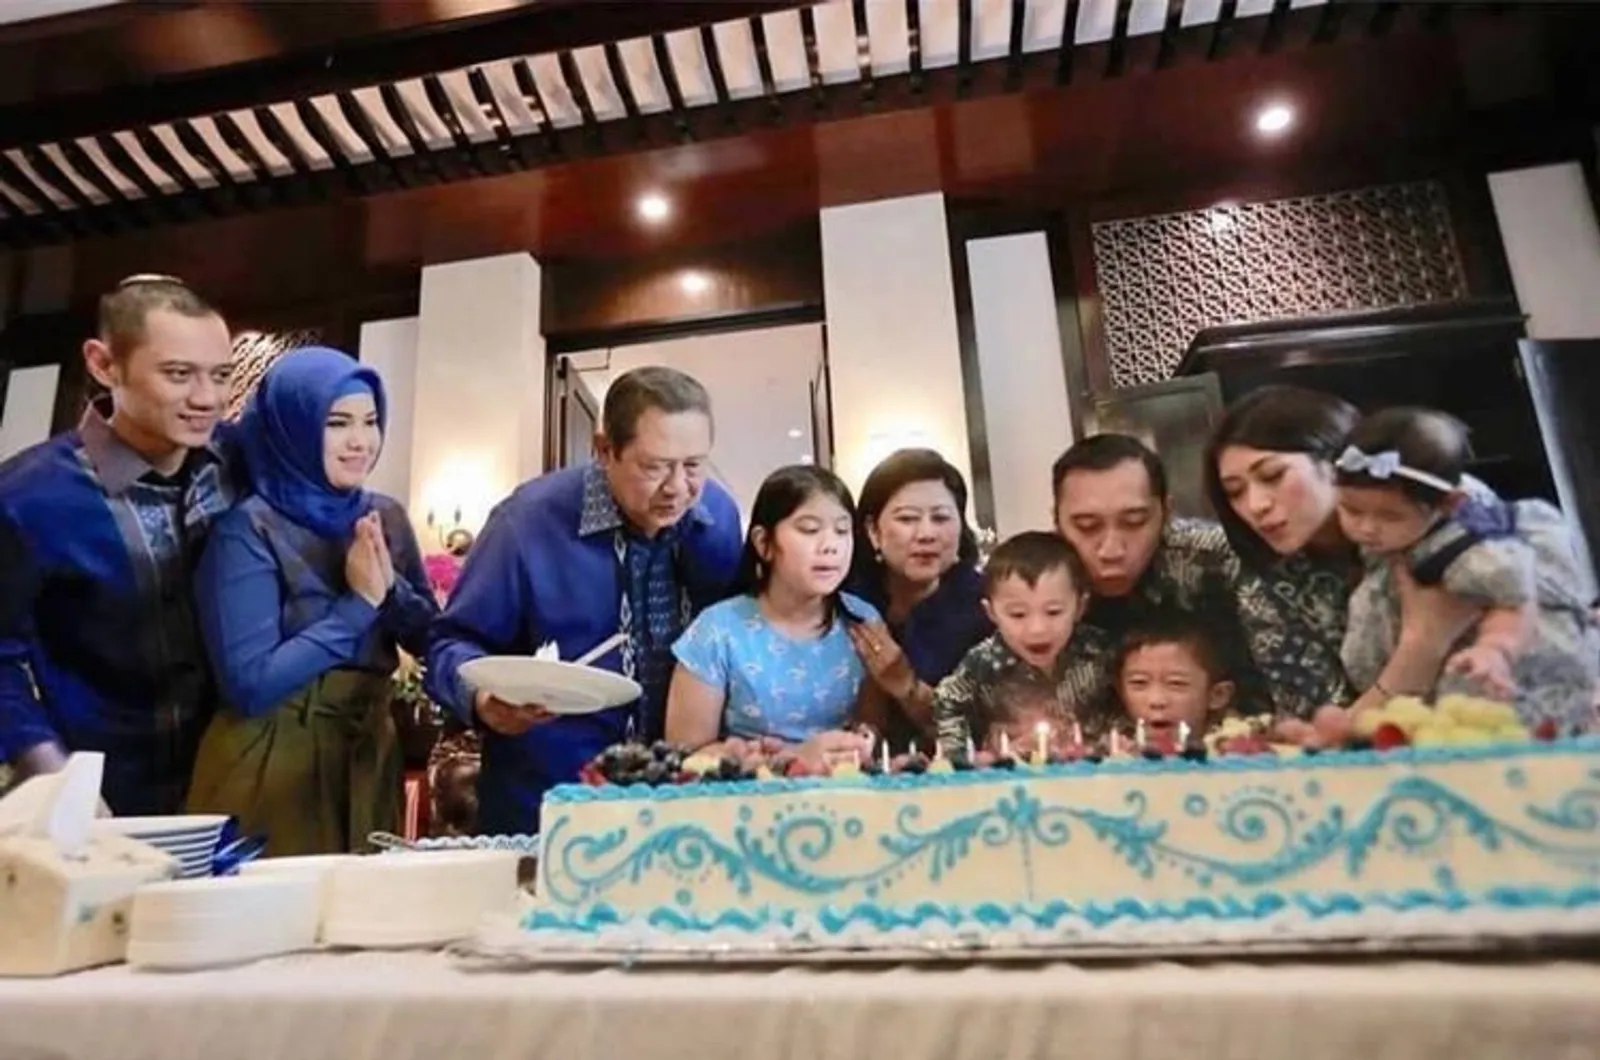 Jadi Panutan, Potret SBY dan Keluarga yang Jarang Dilihat Publik